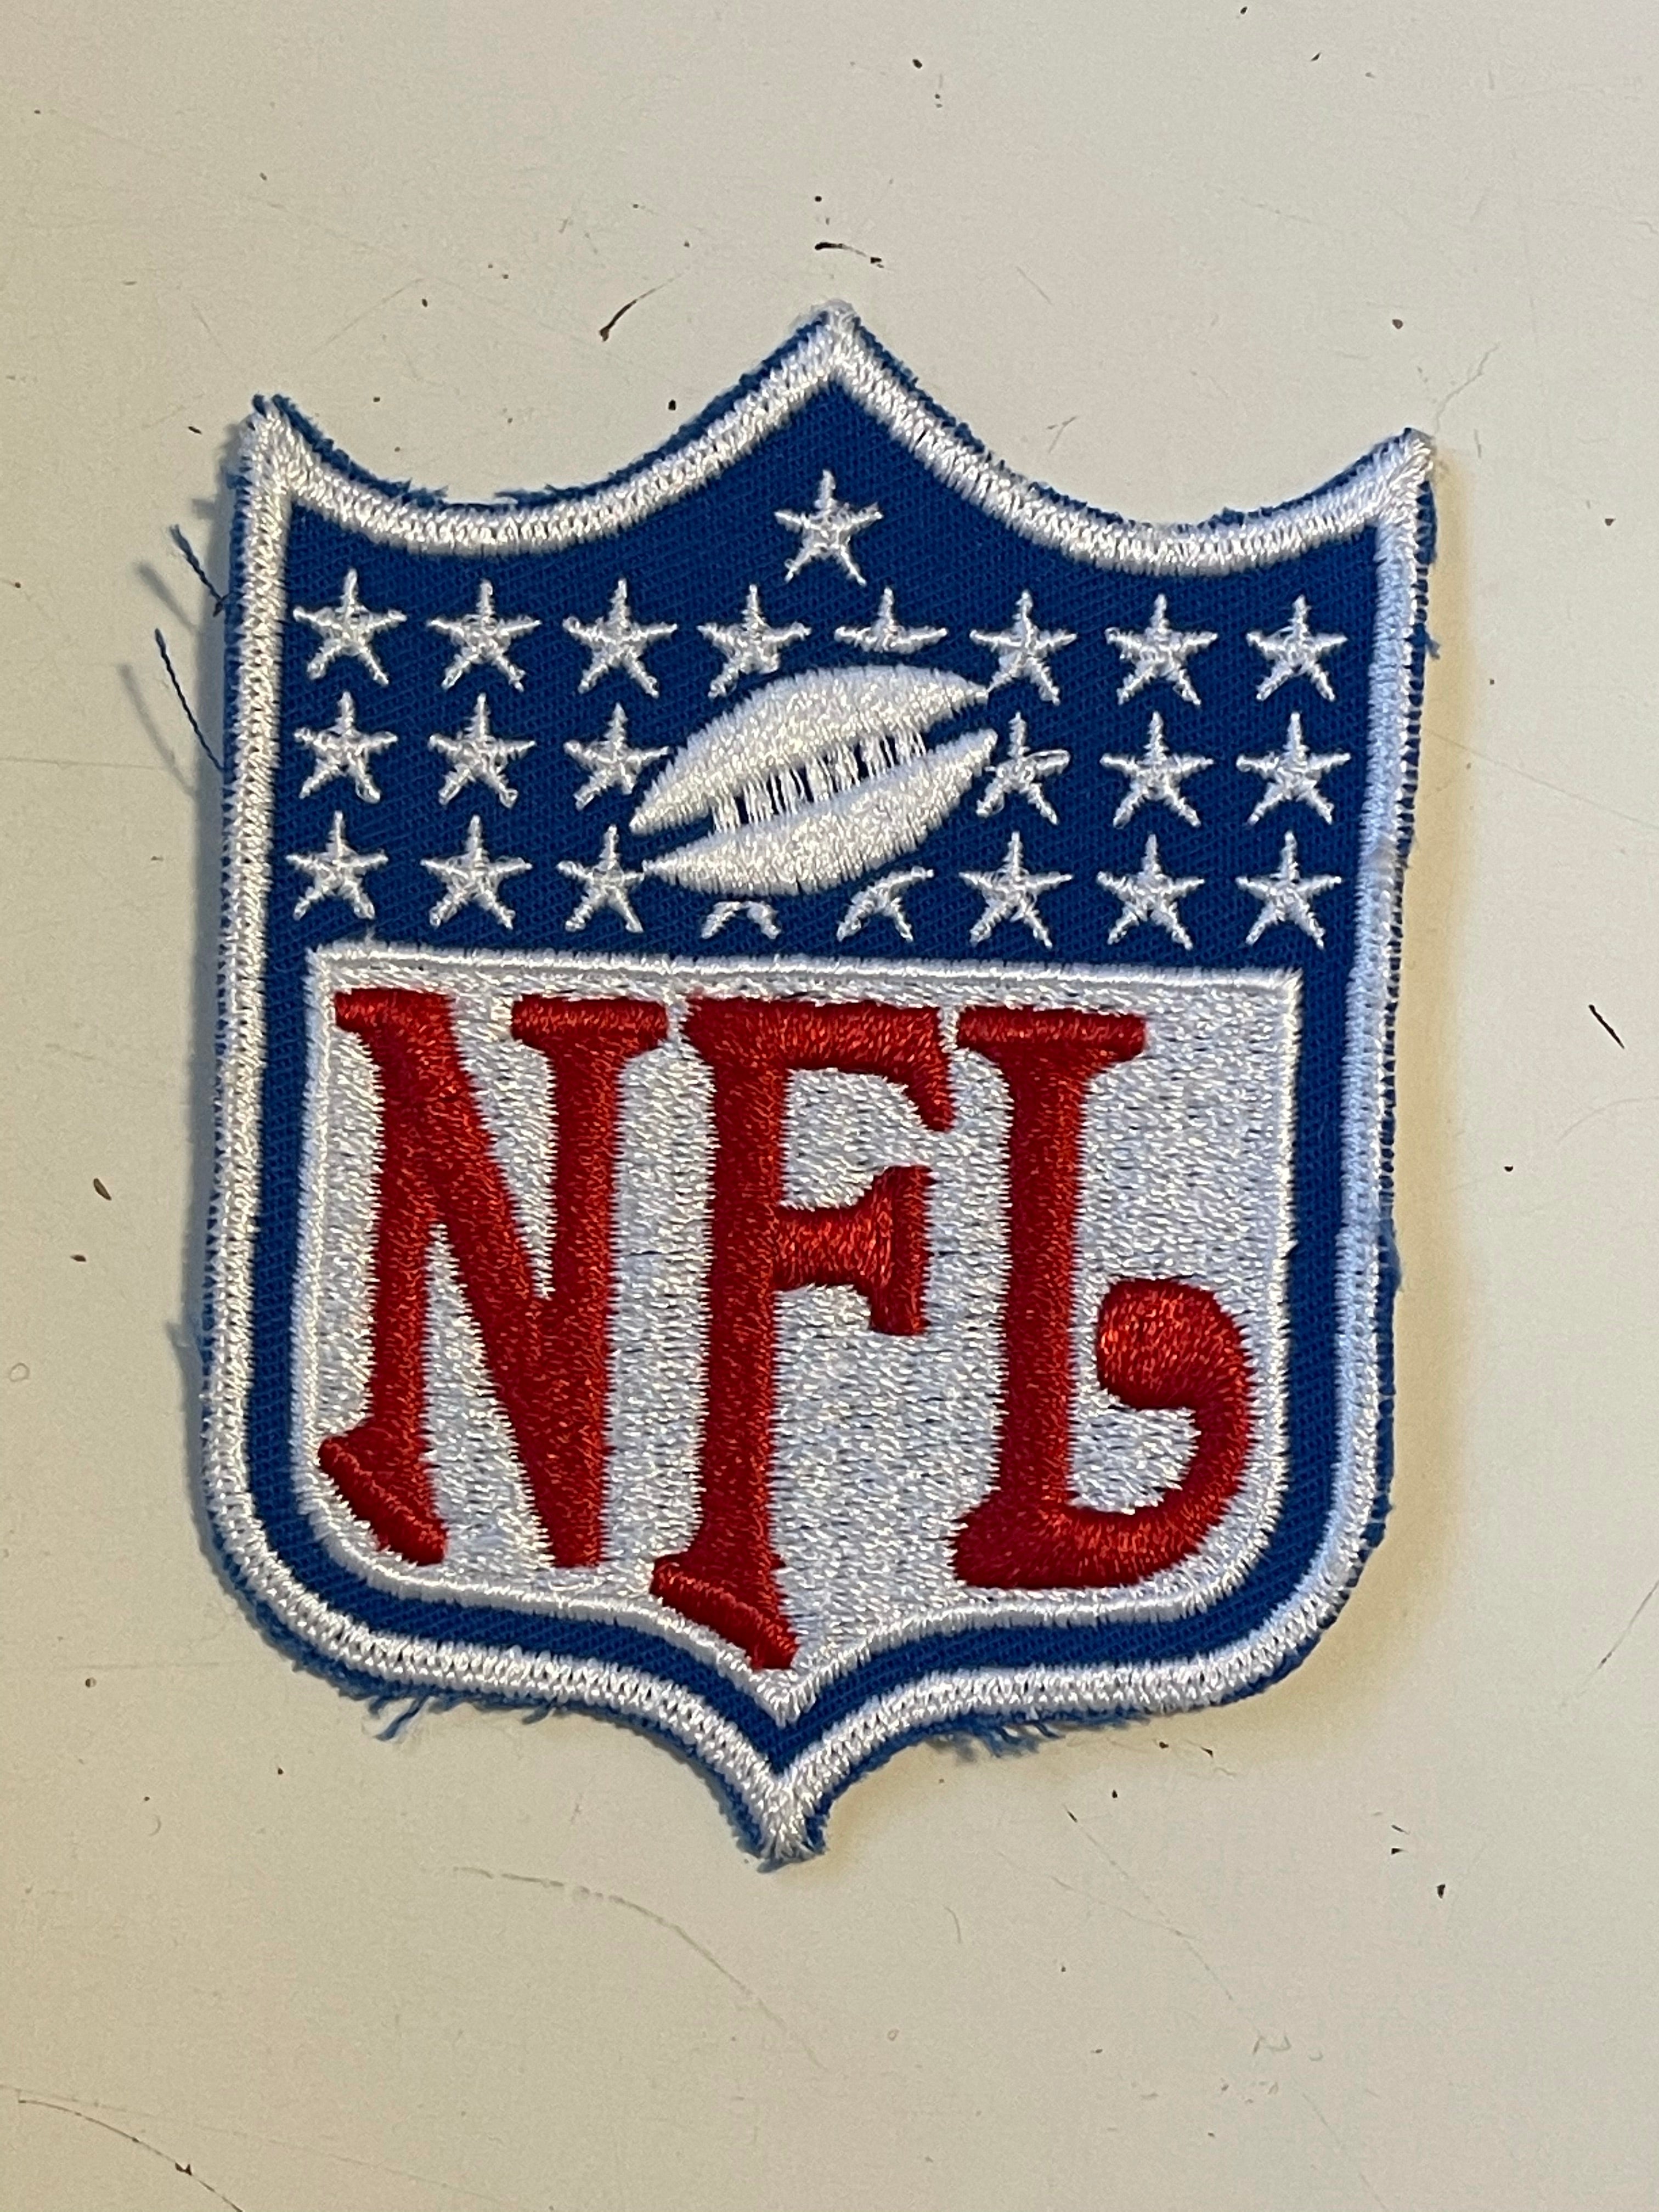 NFL football league patch 1990s